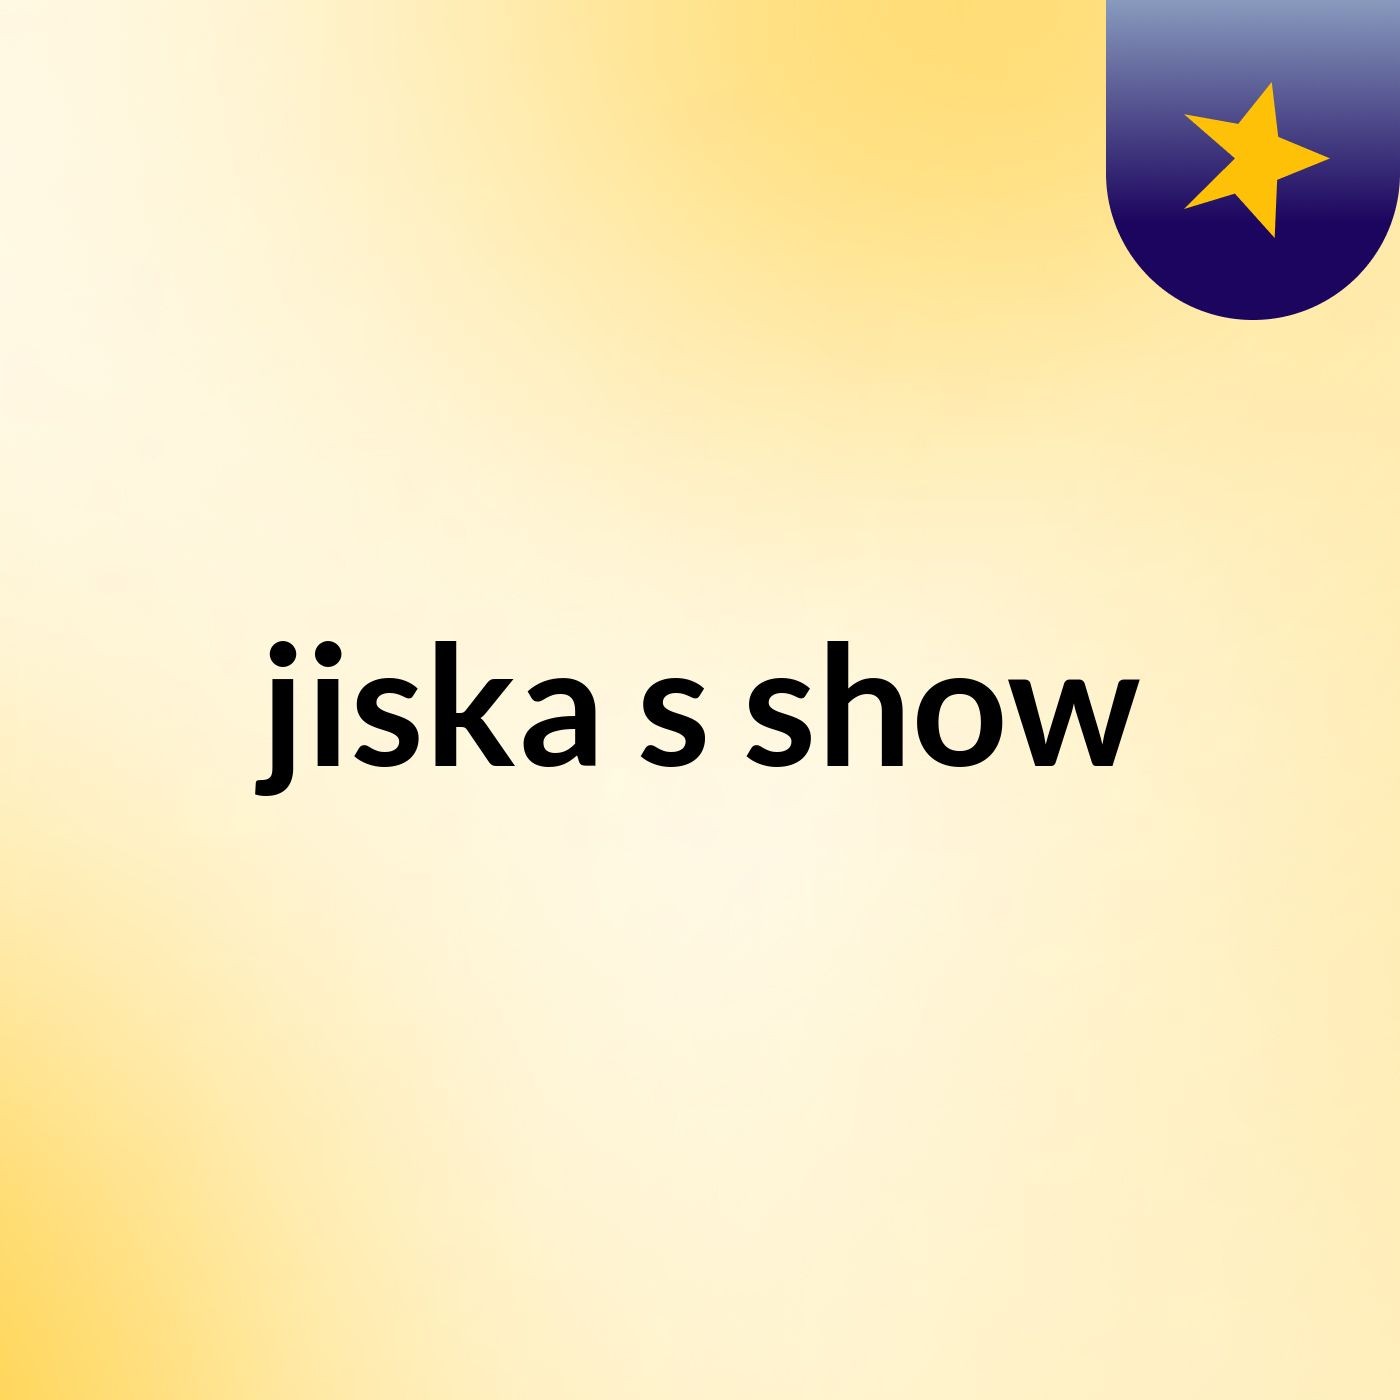 jiska's show